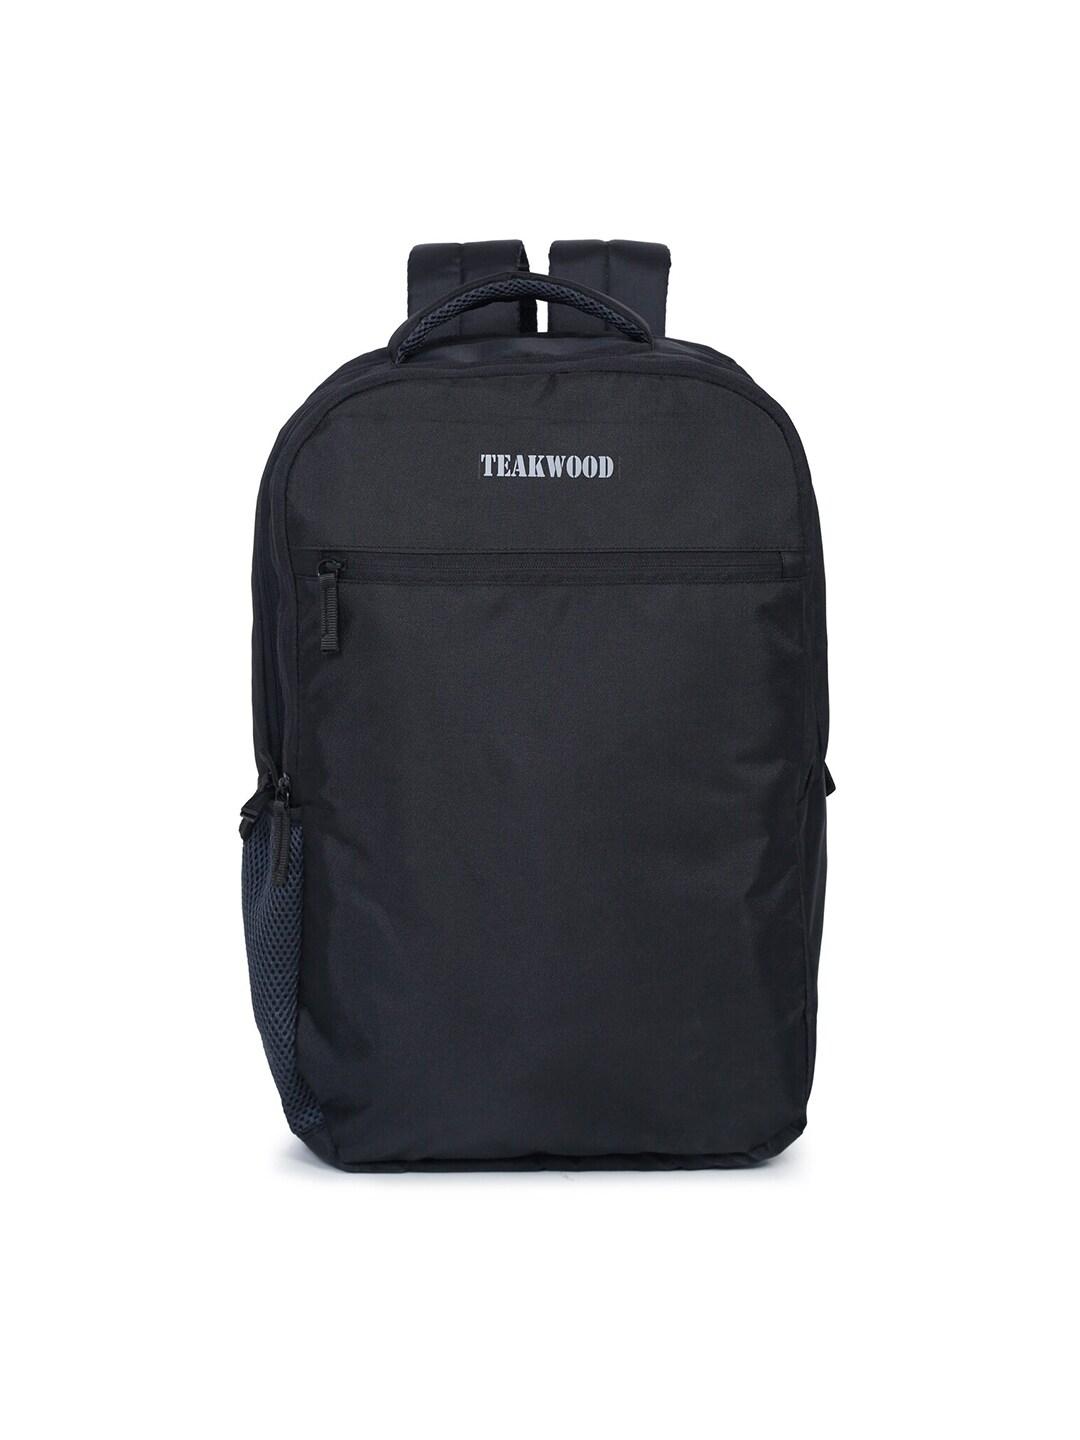 teakwood leathers black & grey 15 inch solid laptop backpack